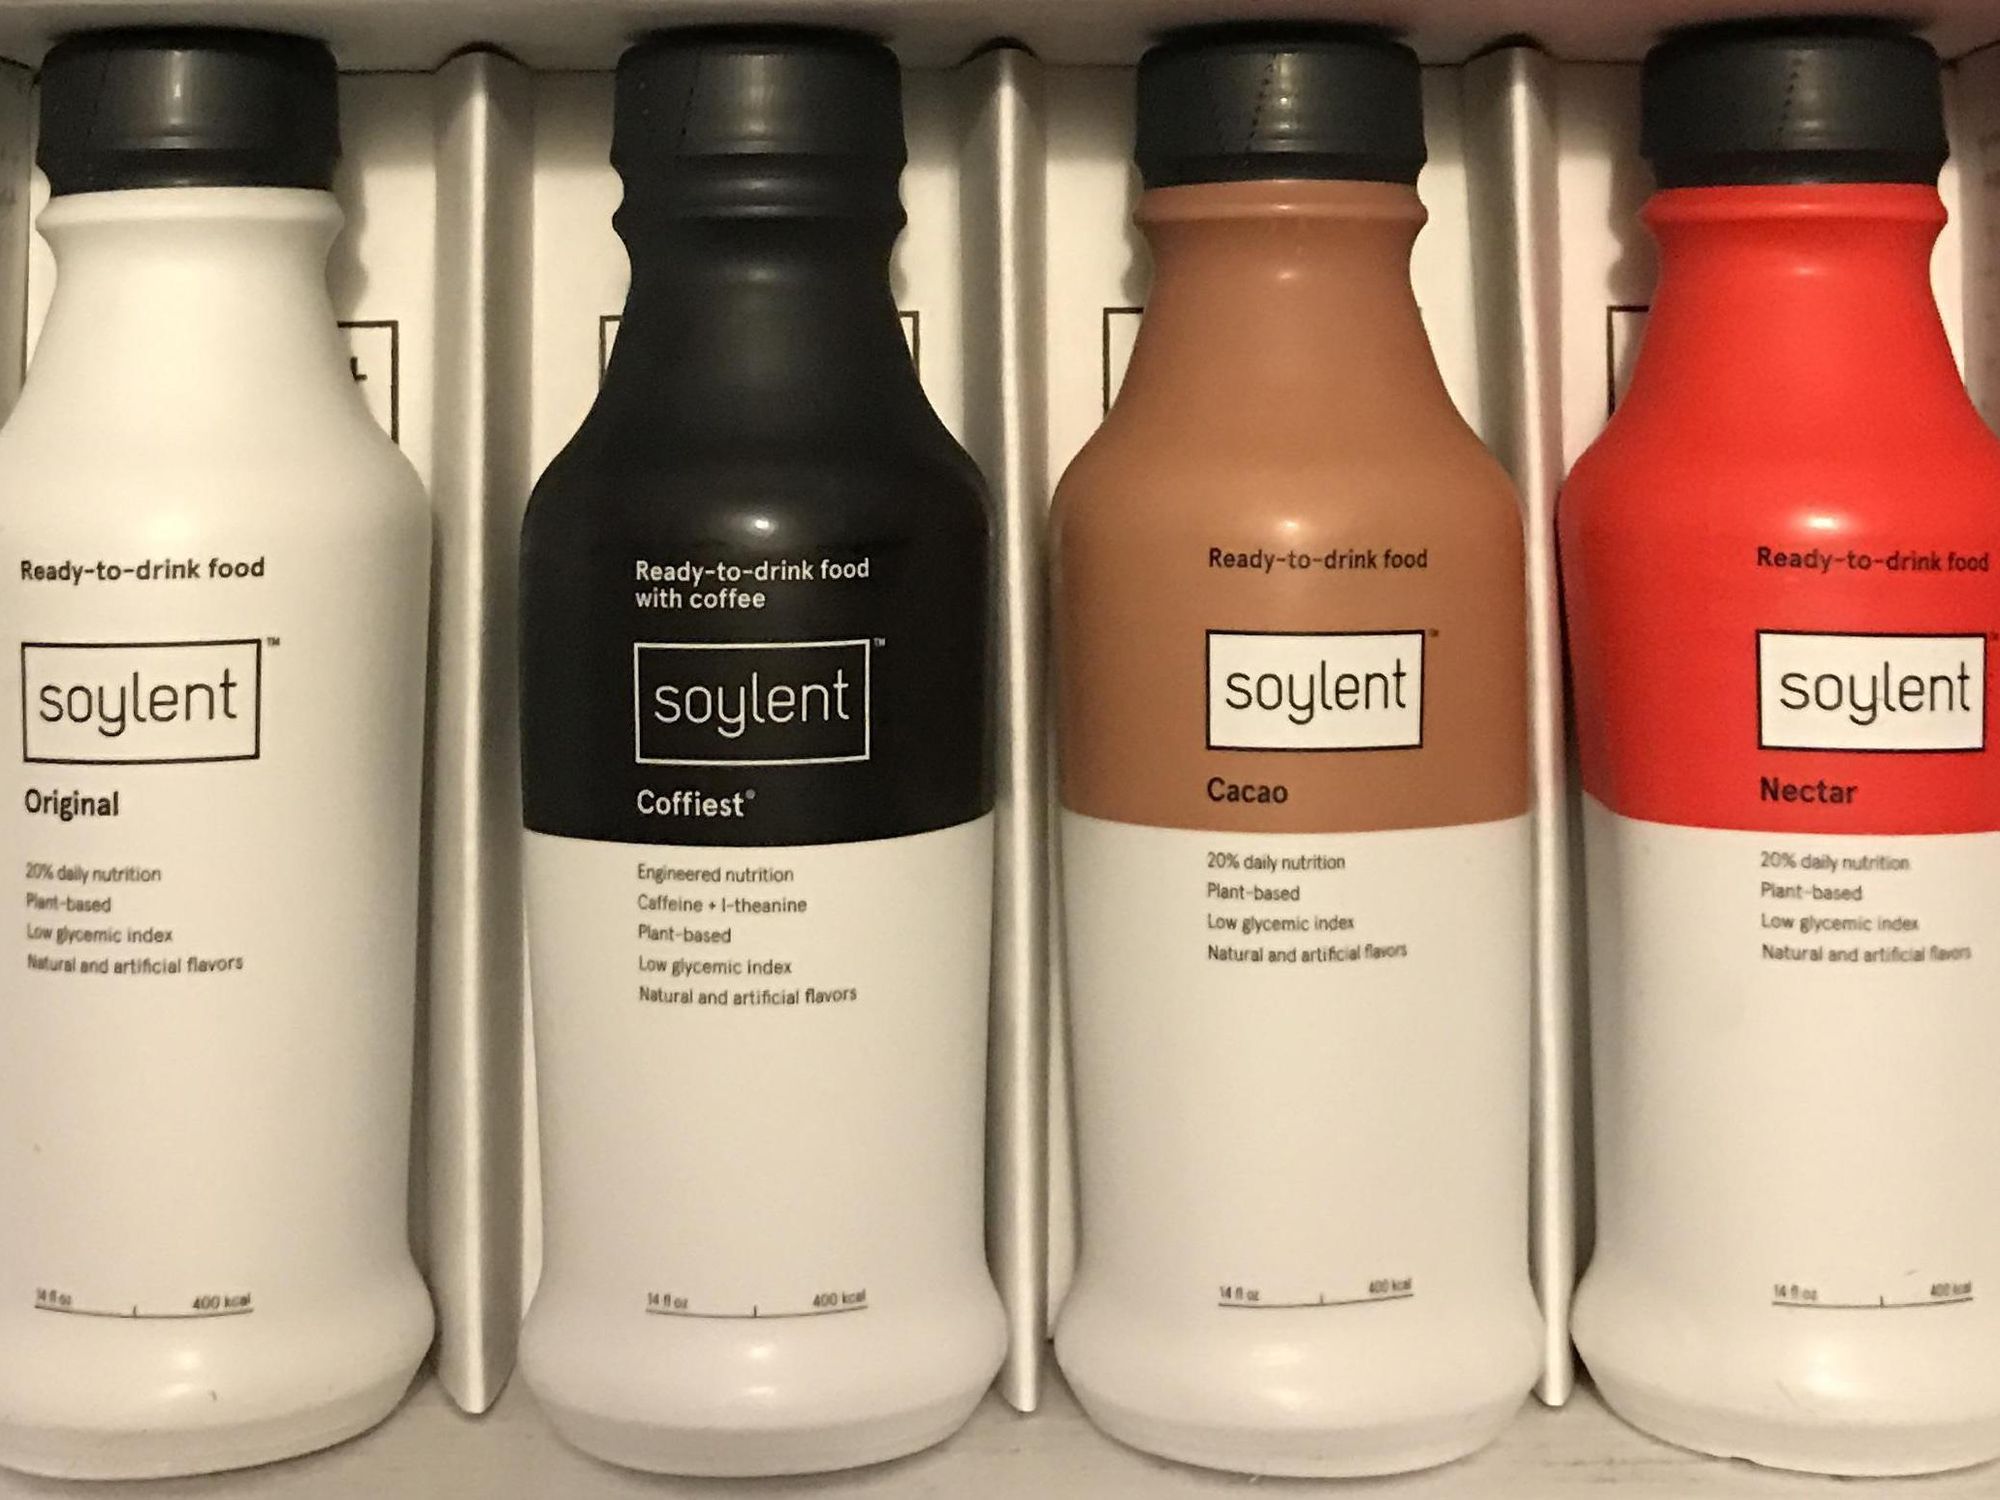 Does a better shaker bottle exist? : r/soylent